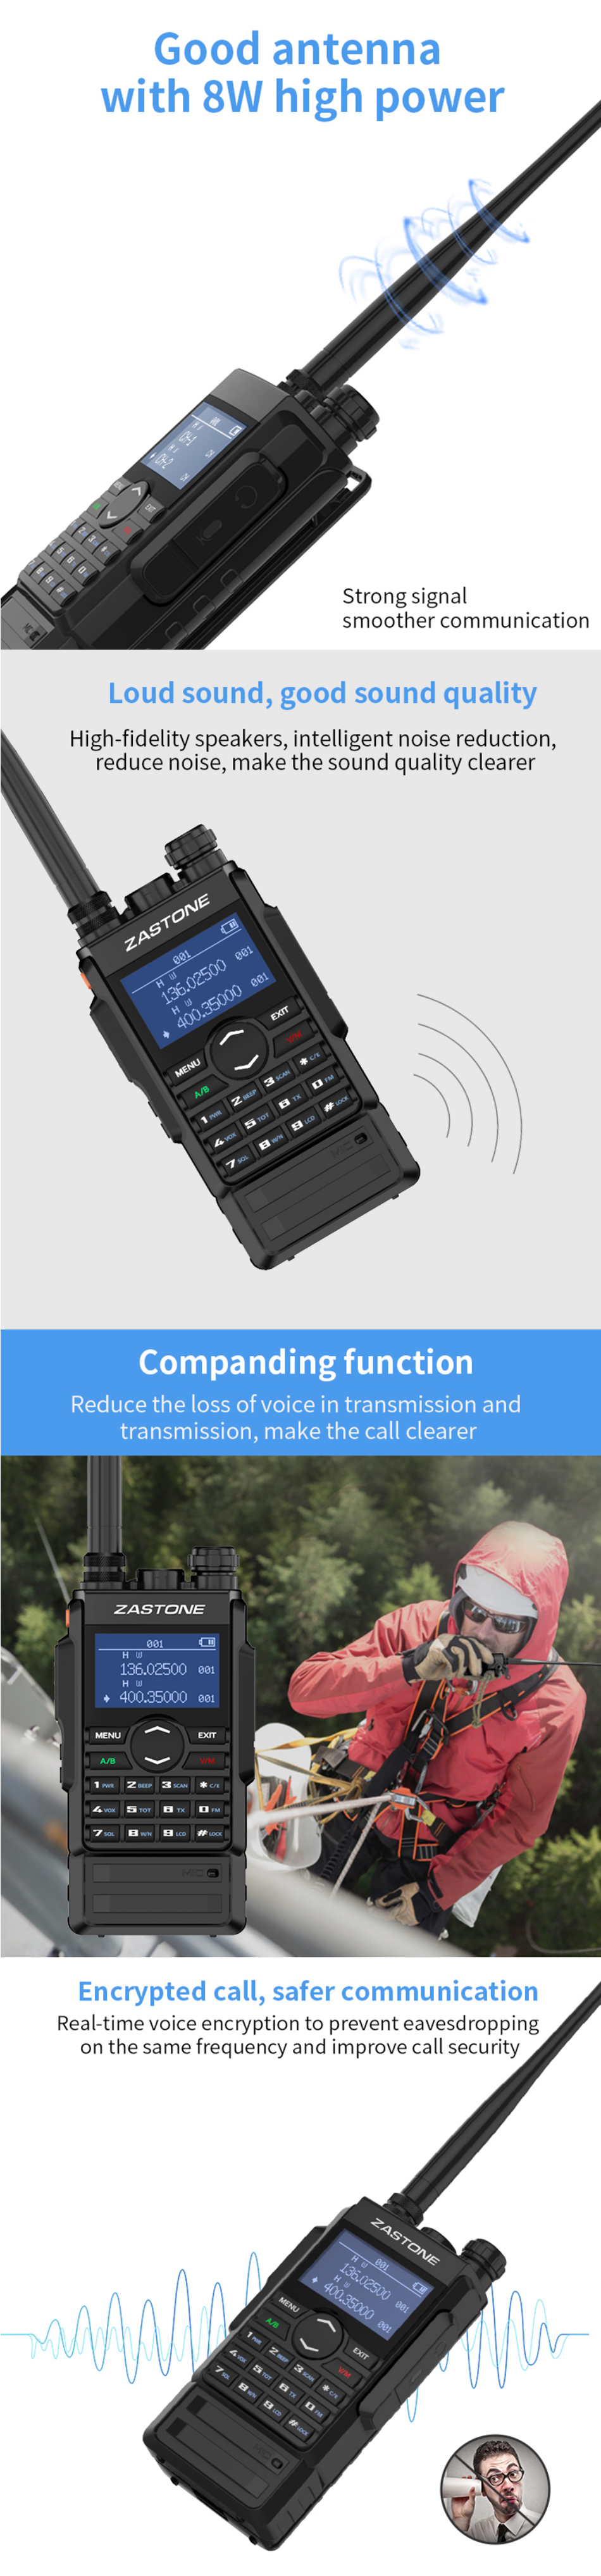 ZASTONE-M7-250-Channels-8W-Walkie-Talkie-VHF-UHF-Portable-Radio-2600mAh-Battery-Two-Way-Radio-Big-Sc-1780216-2